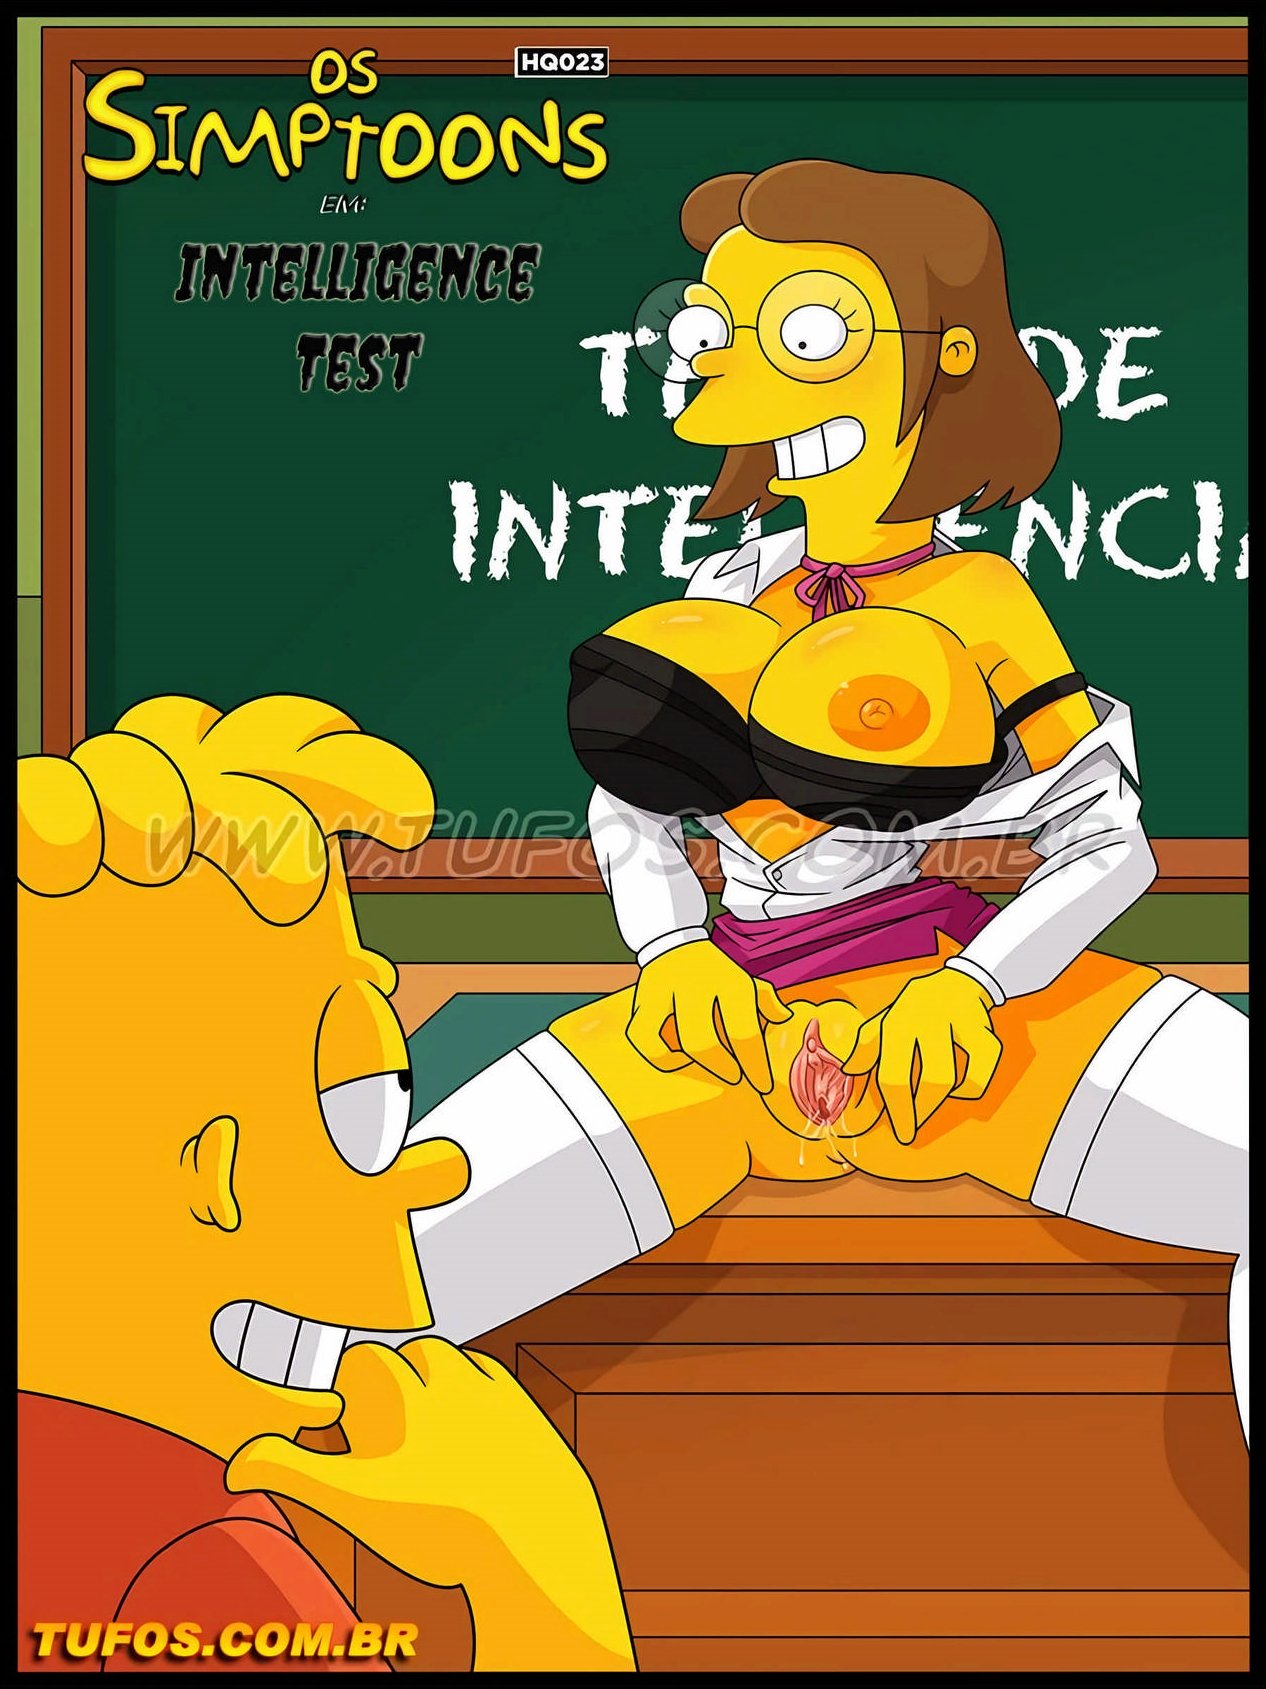 SureFap xxx porno The Simpsons - [Tufos] - Os Simptoons 023 - Teste De Inteligencia